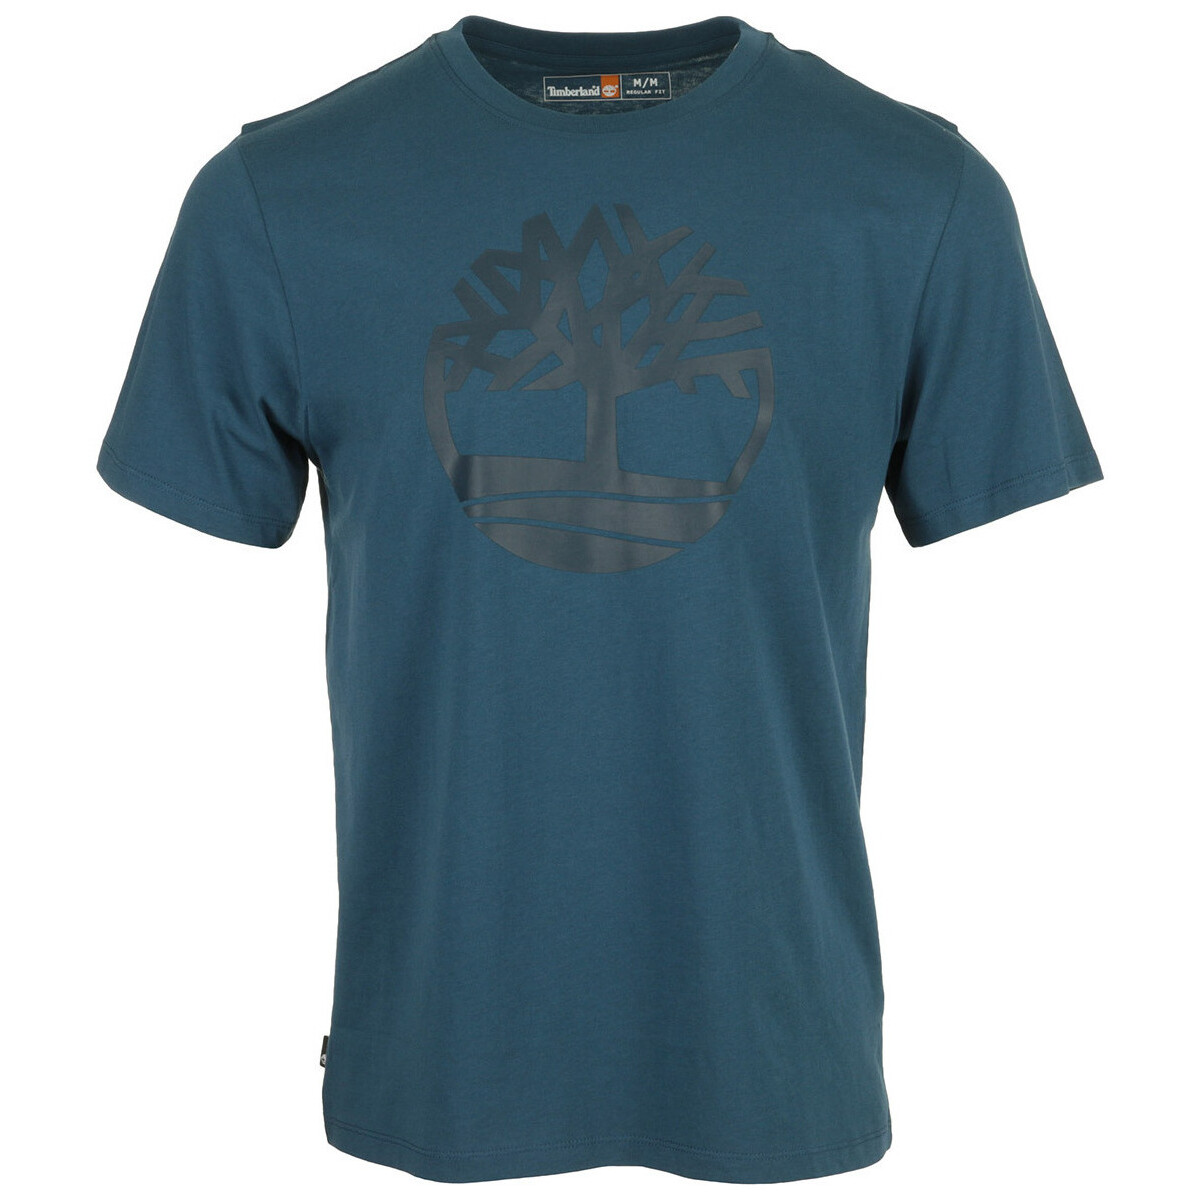 Textiel Heren T-shirts korte mouwen Timberland Tree Logo Short Sleeve Blauw